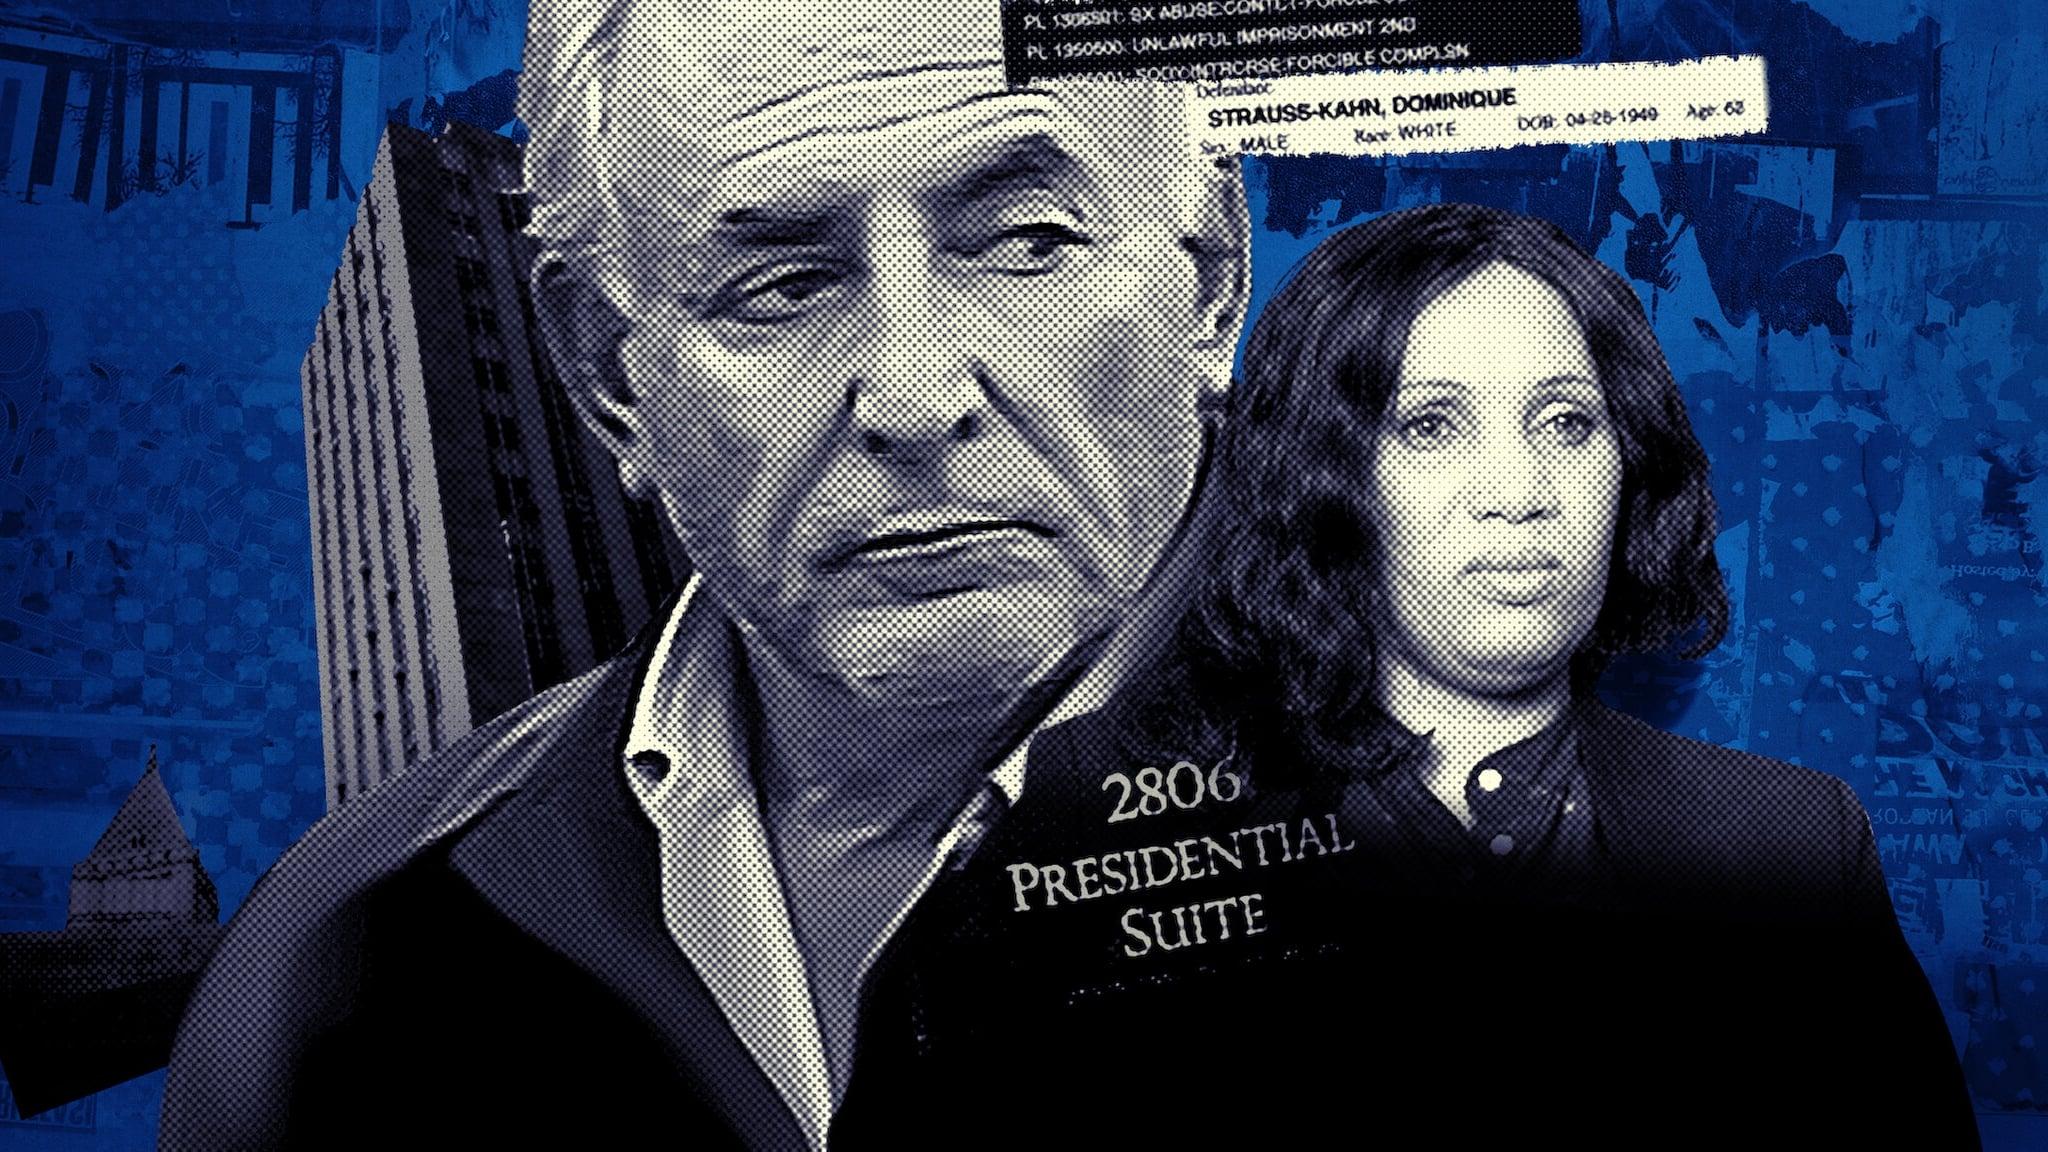 Dominique Strauss-Kahn backdrop